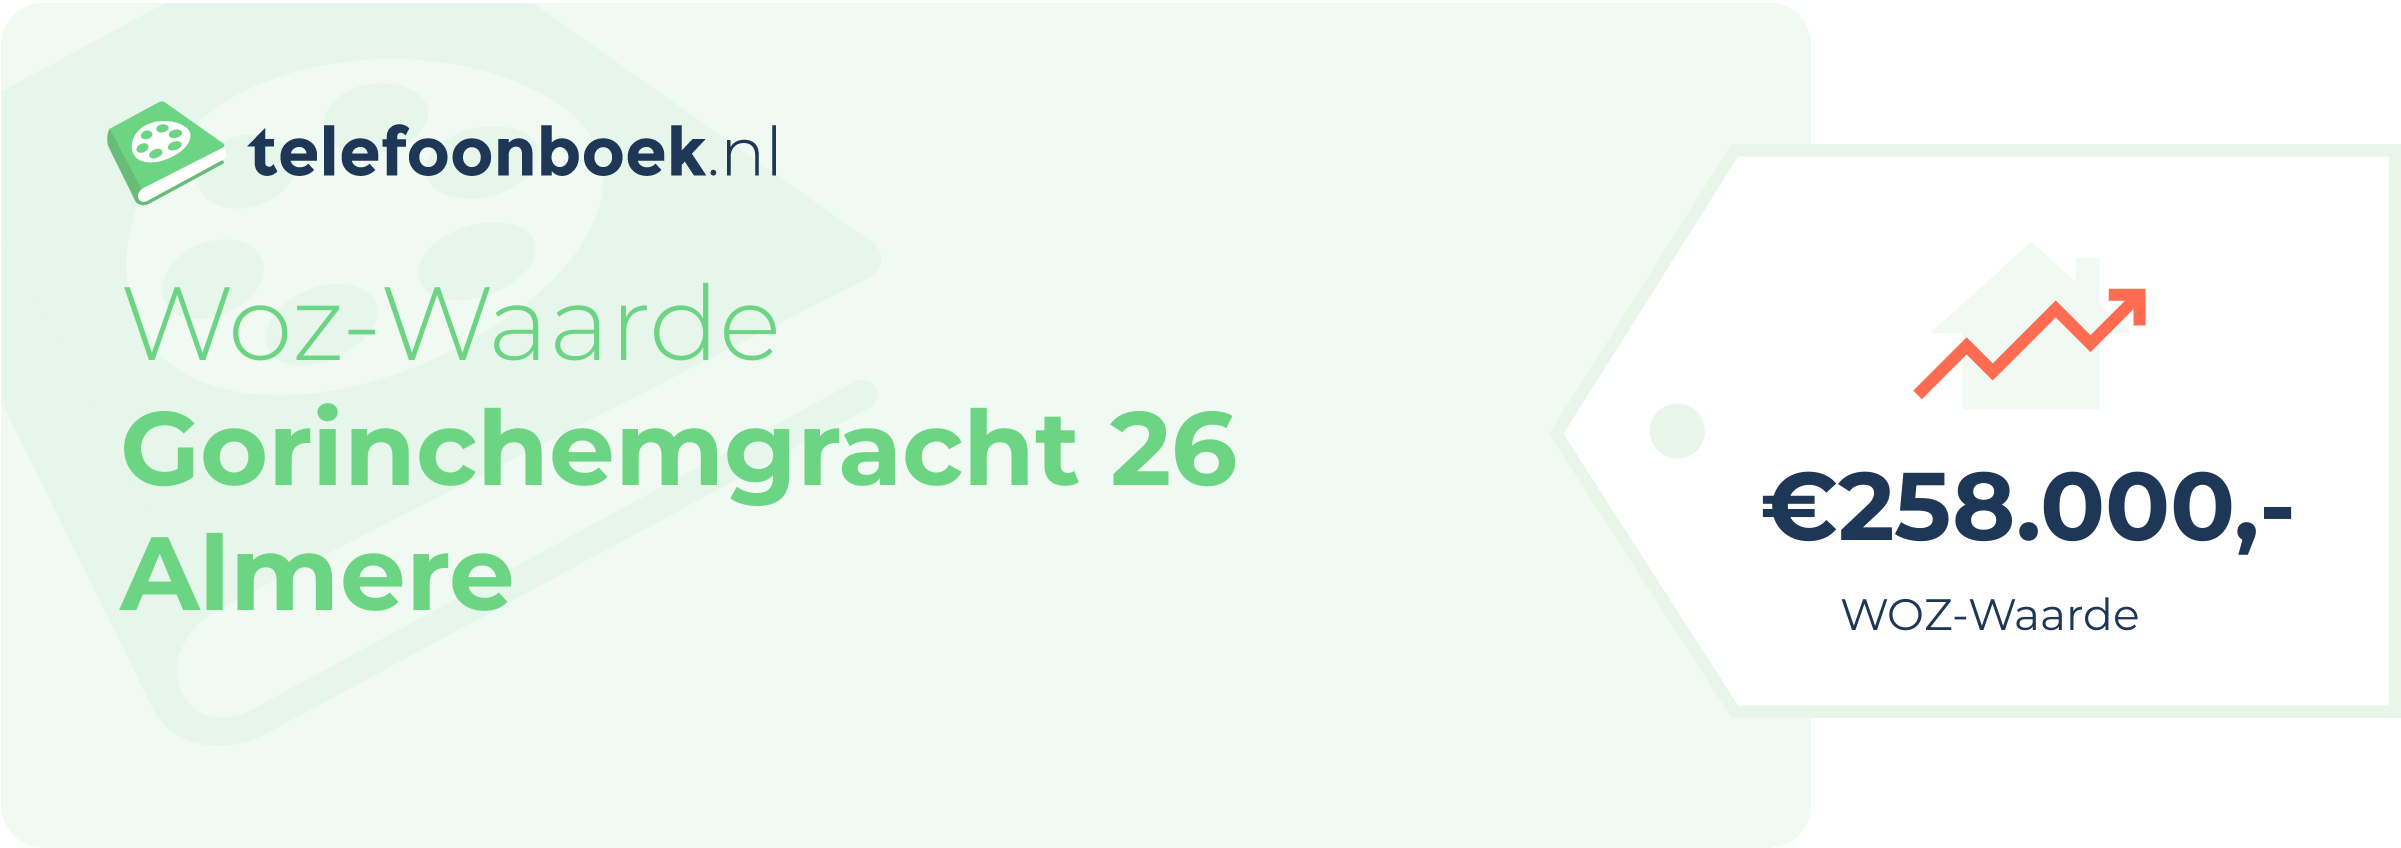 WOZ-waarde Gorinchemgracht 26 Almere